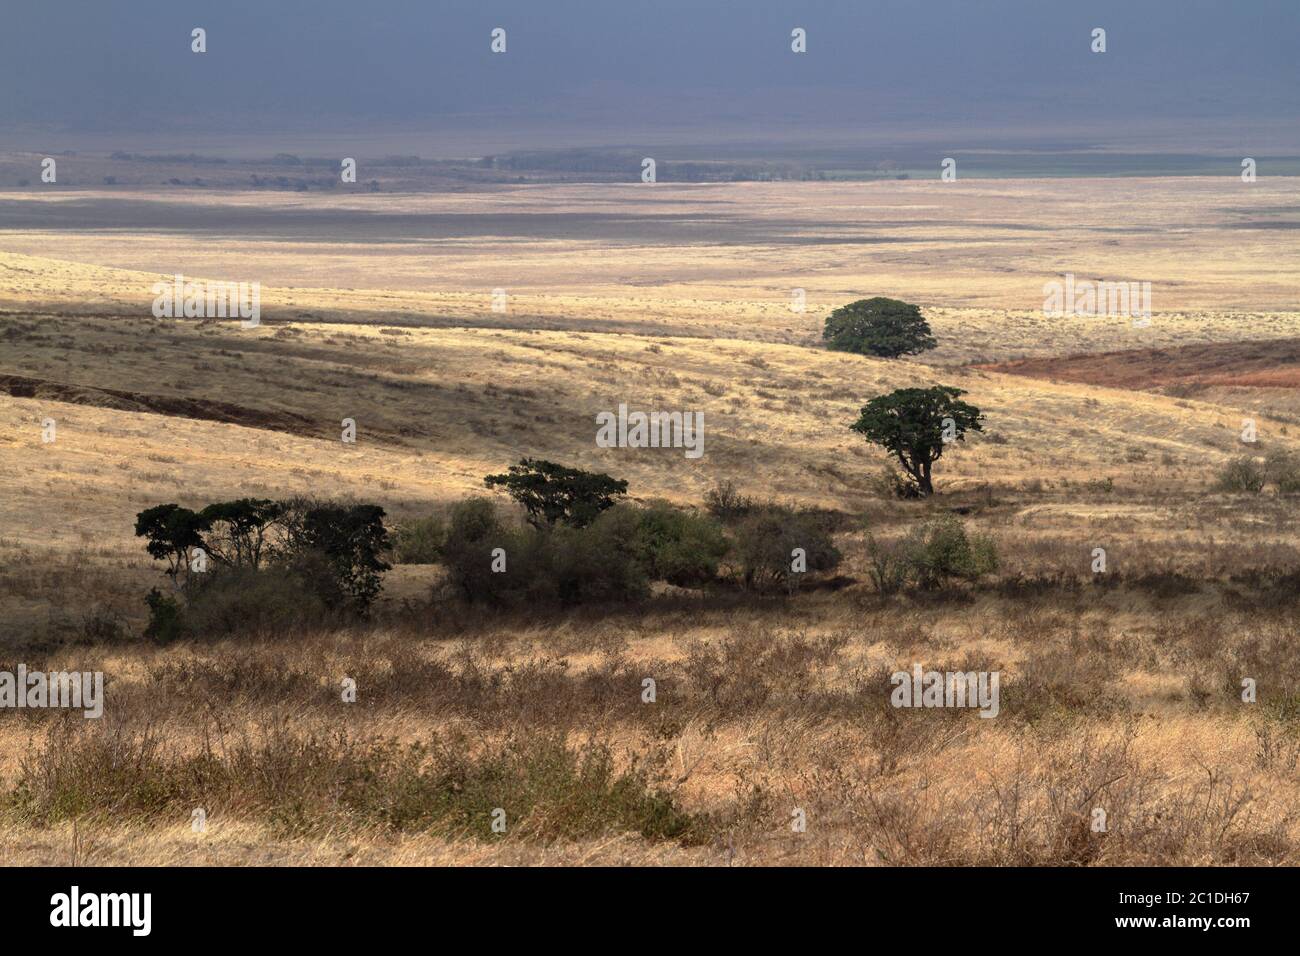 The Savannah of the Serengeti in Tanzania Stock Photo